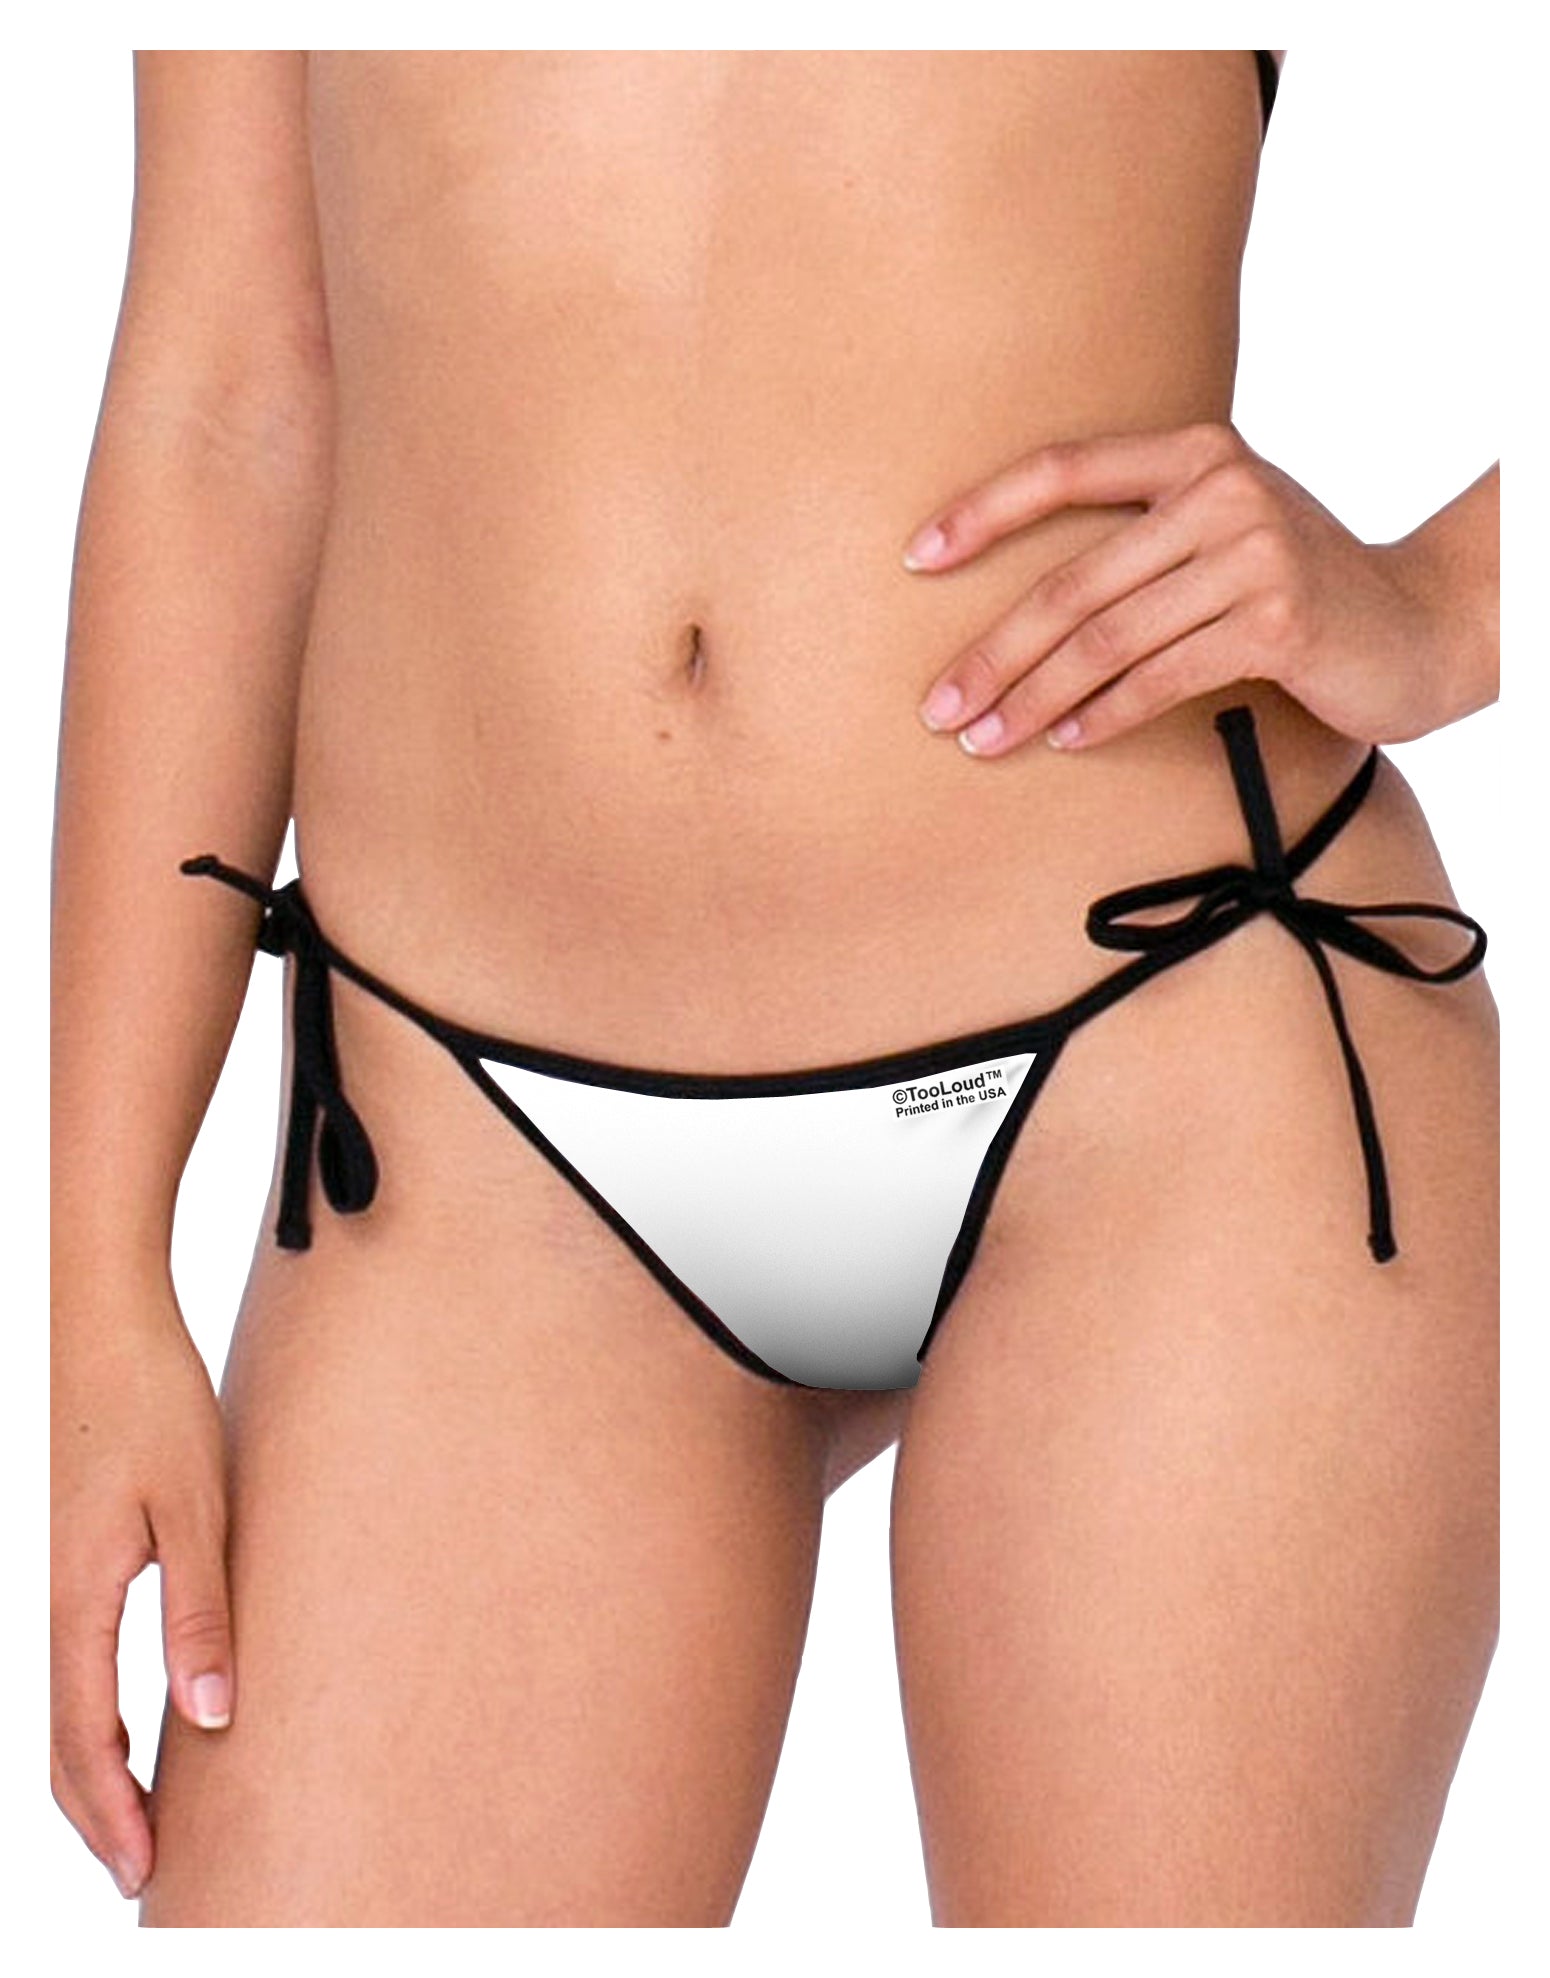 Custom Personalized Image or Text Bikini Bottom - ABC Underwear